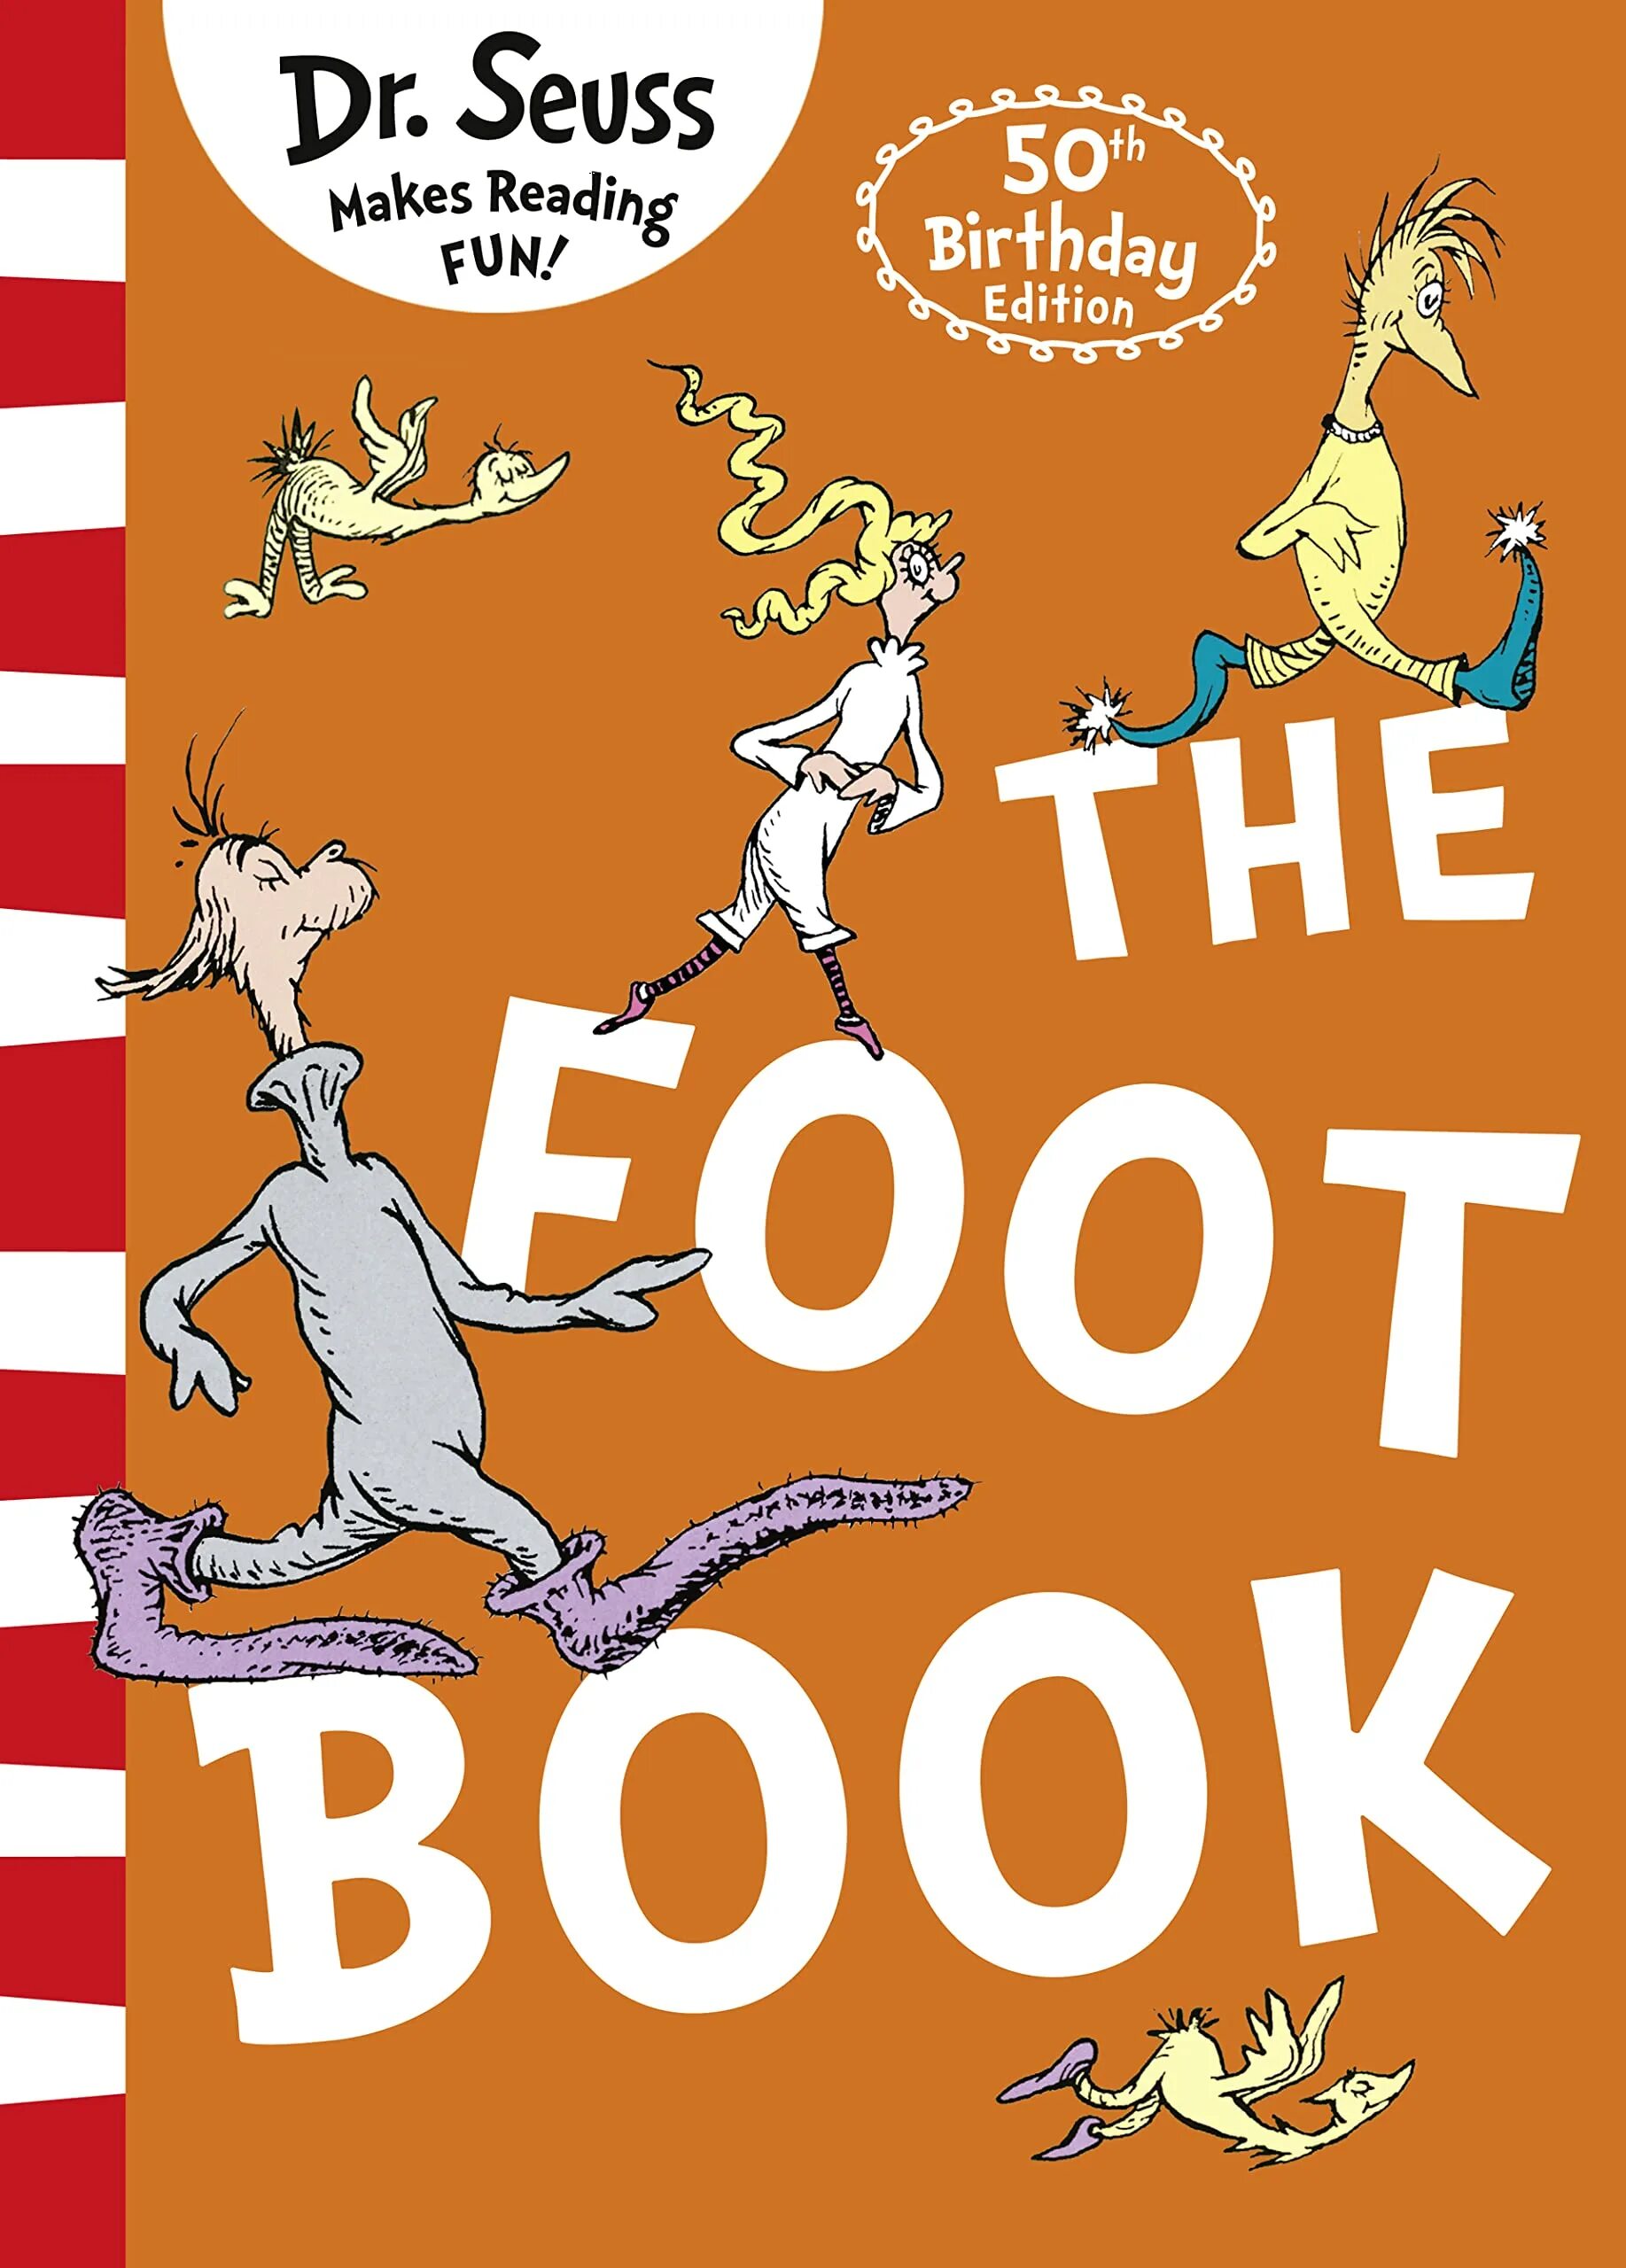 Фута книга. The foot book доктор Сьюз книга. Dr Seuss "the foot book". Dr Seuss книги на английском. Новая книга доктора Сьюза.